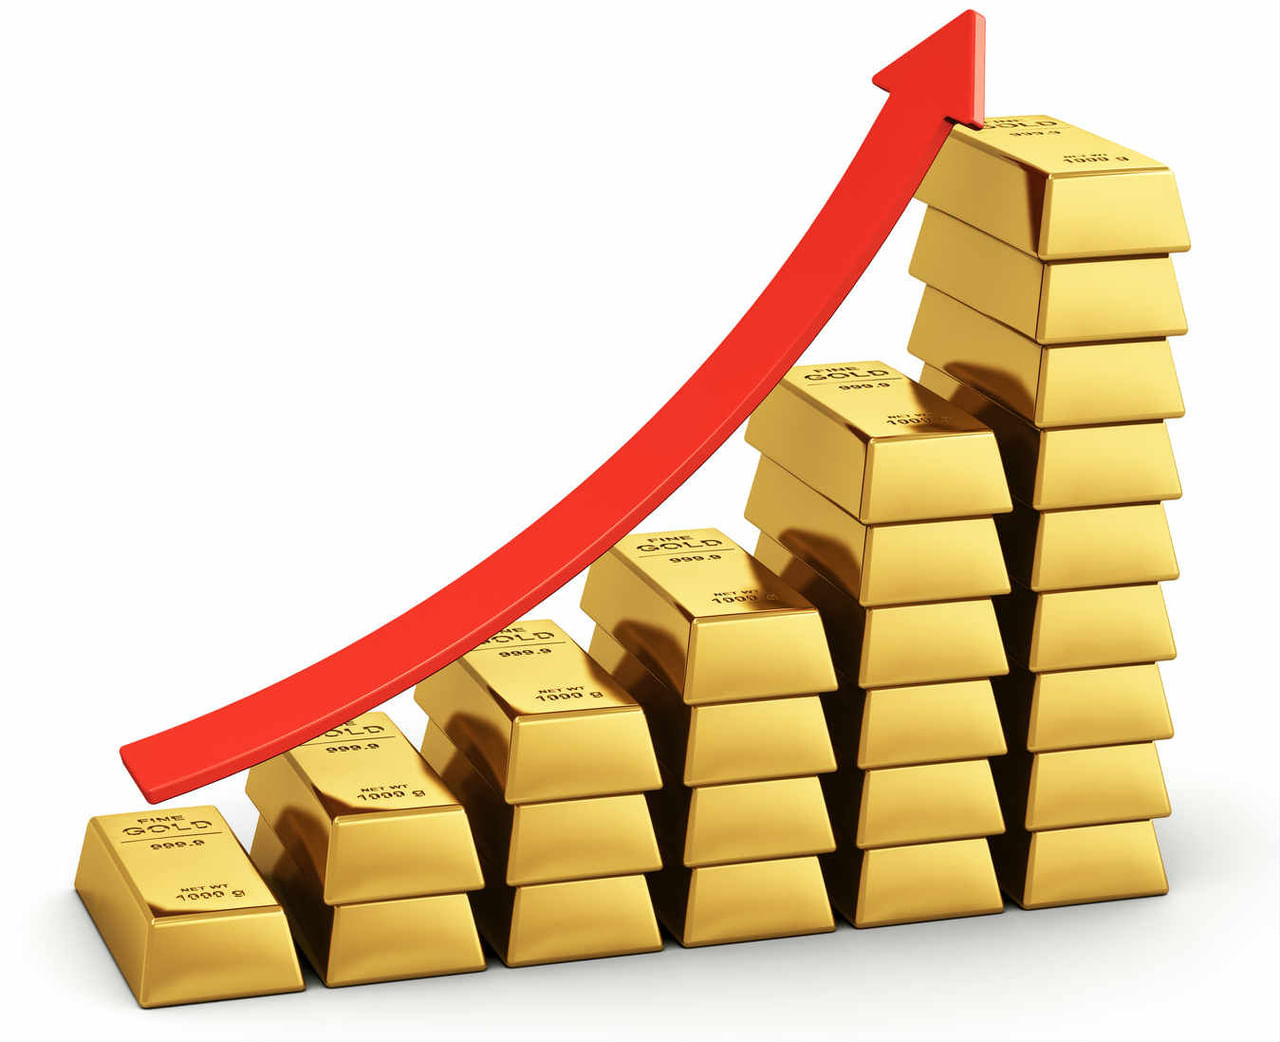 GOLD: વર્ષ 2021માં અન્ય રોકાણોની સરખામણીએ ગોલ્ડ આપી શકે છે સૌથી વધુ 30 થી 40 ટકા રિટર્ન